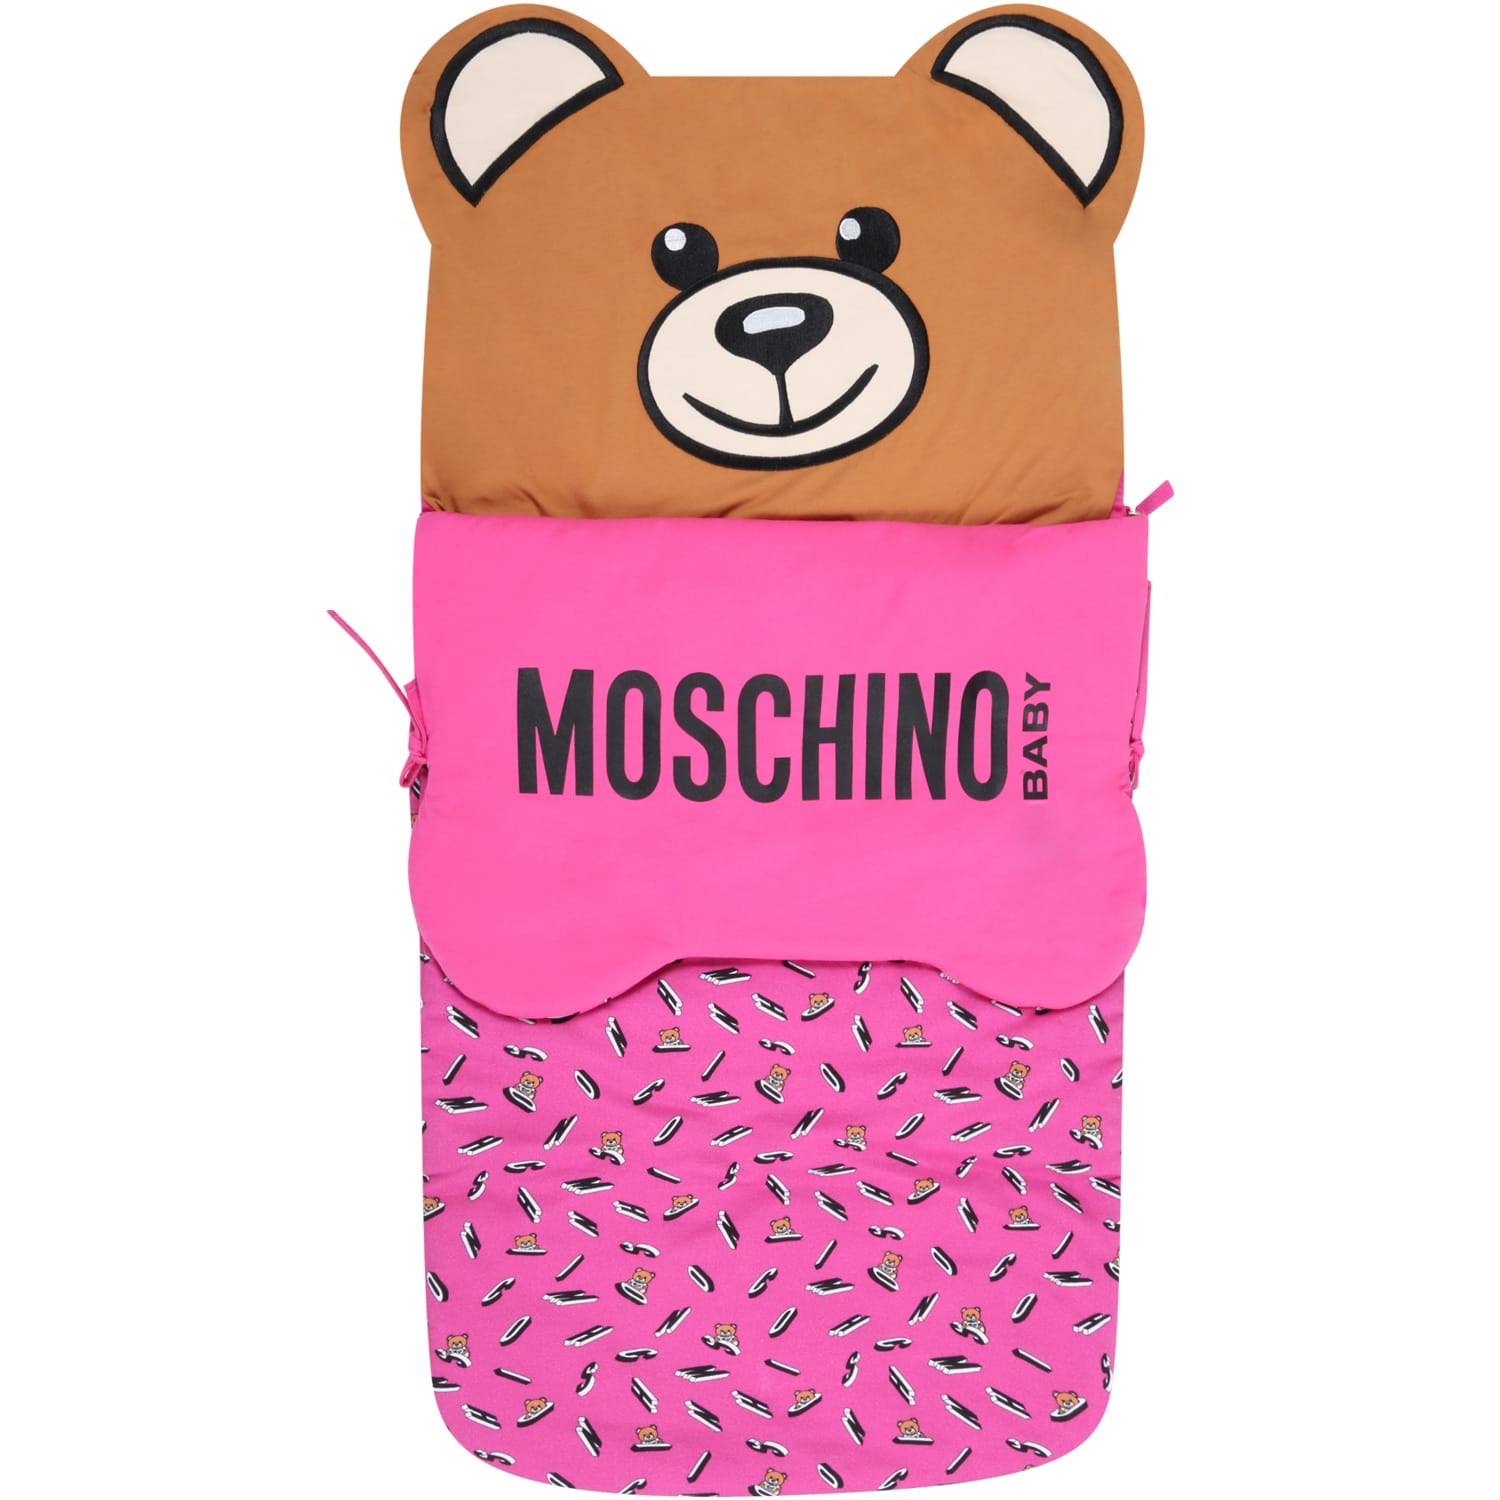 Moschino Fuchsia Sleeping Bag For Baby Girl With Teddy Bears